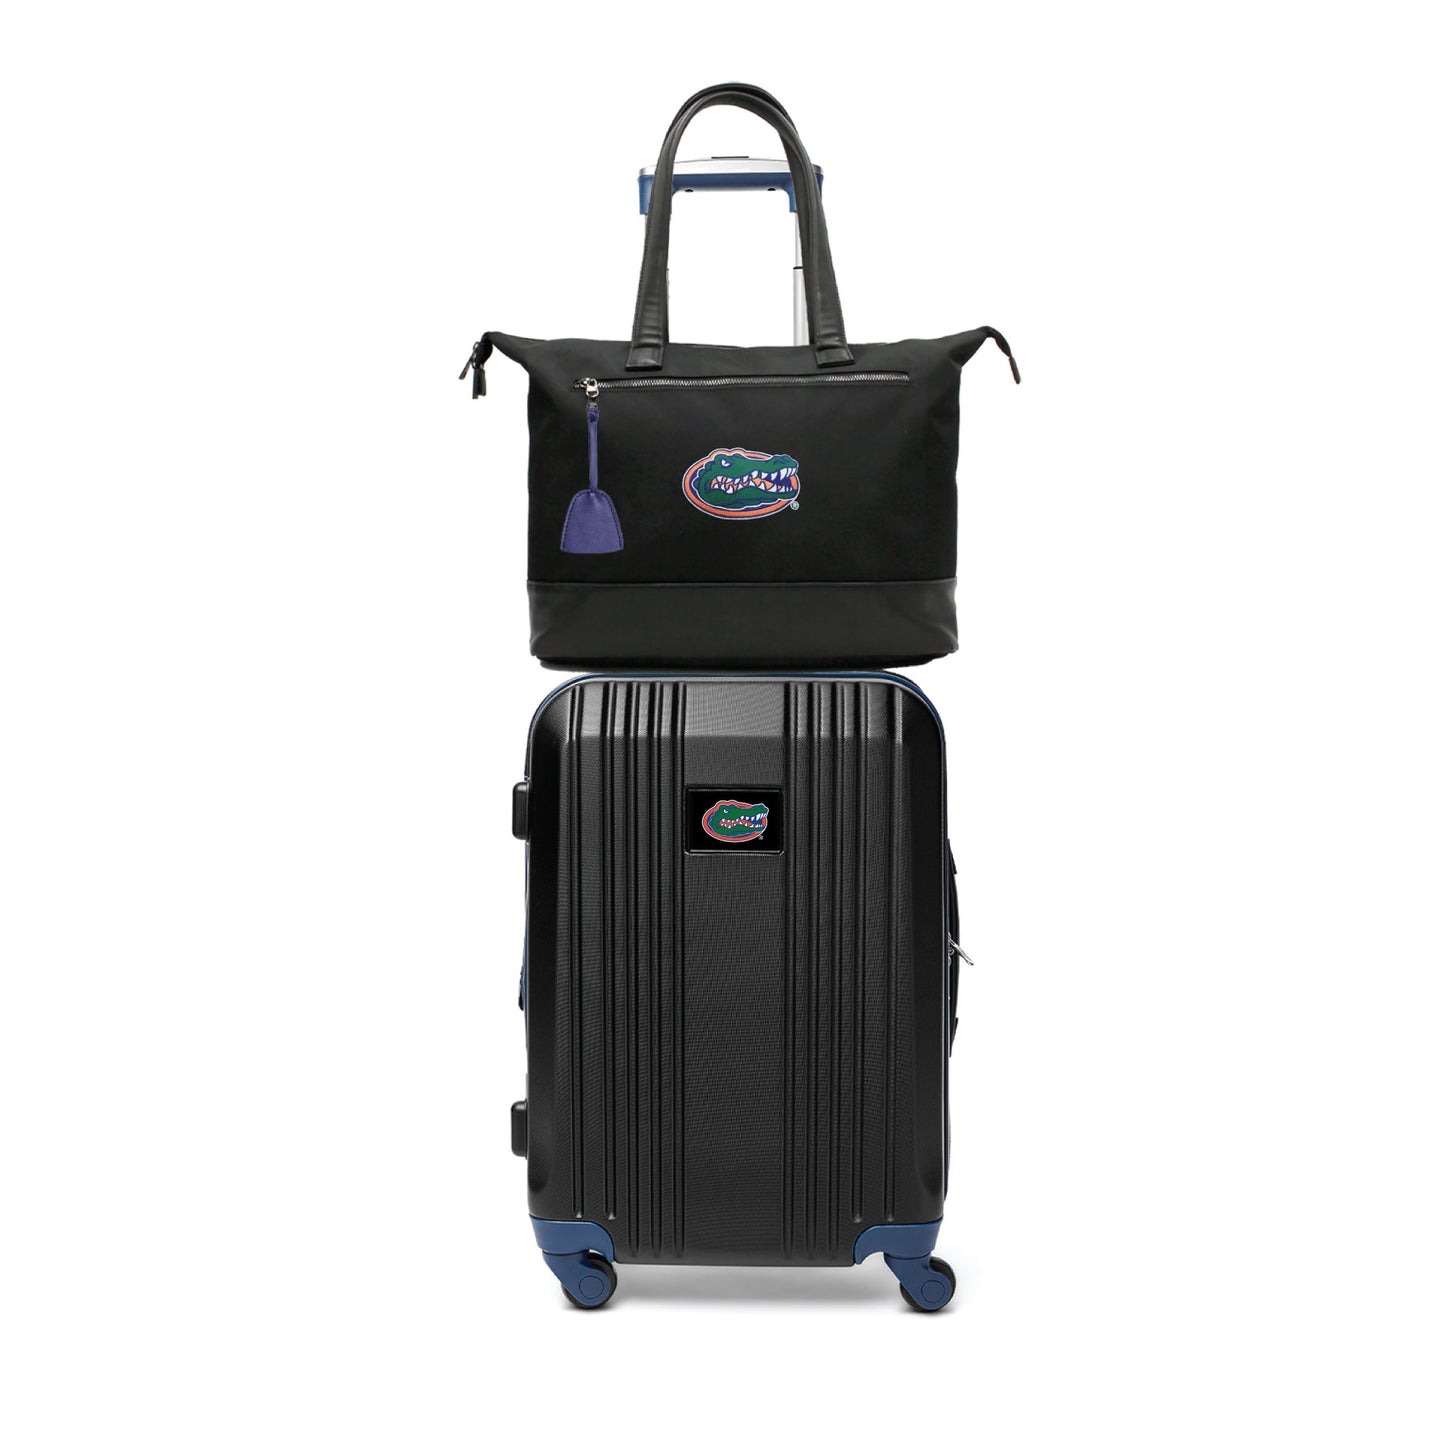 Florida Gators Premium Laptop Tote Bag and Luggage Set